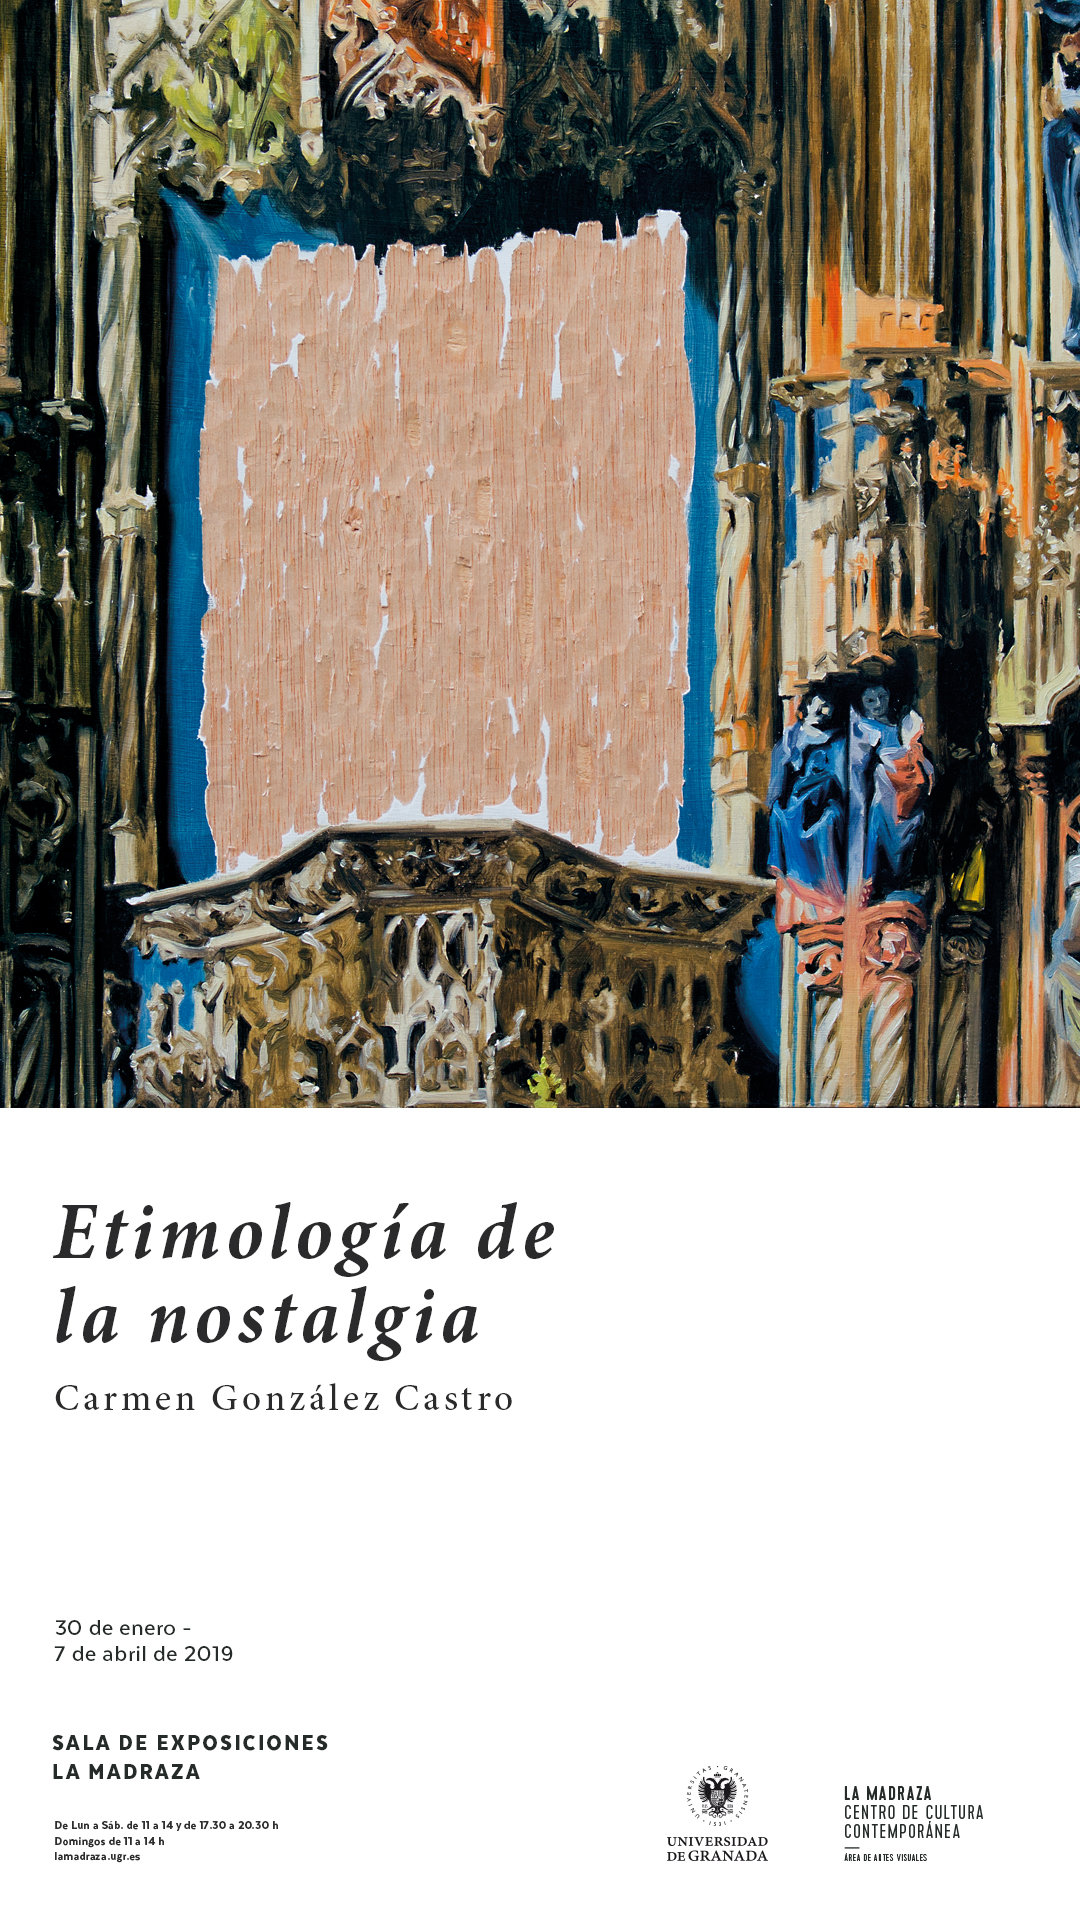 Etimología de la nostalgia de Carmen González Castro